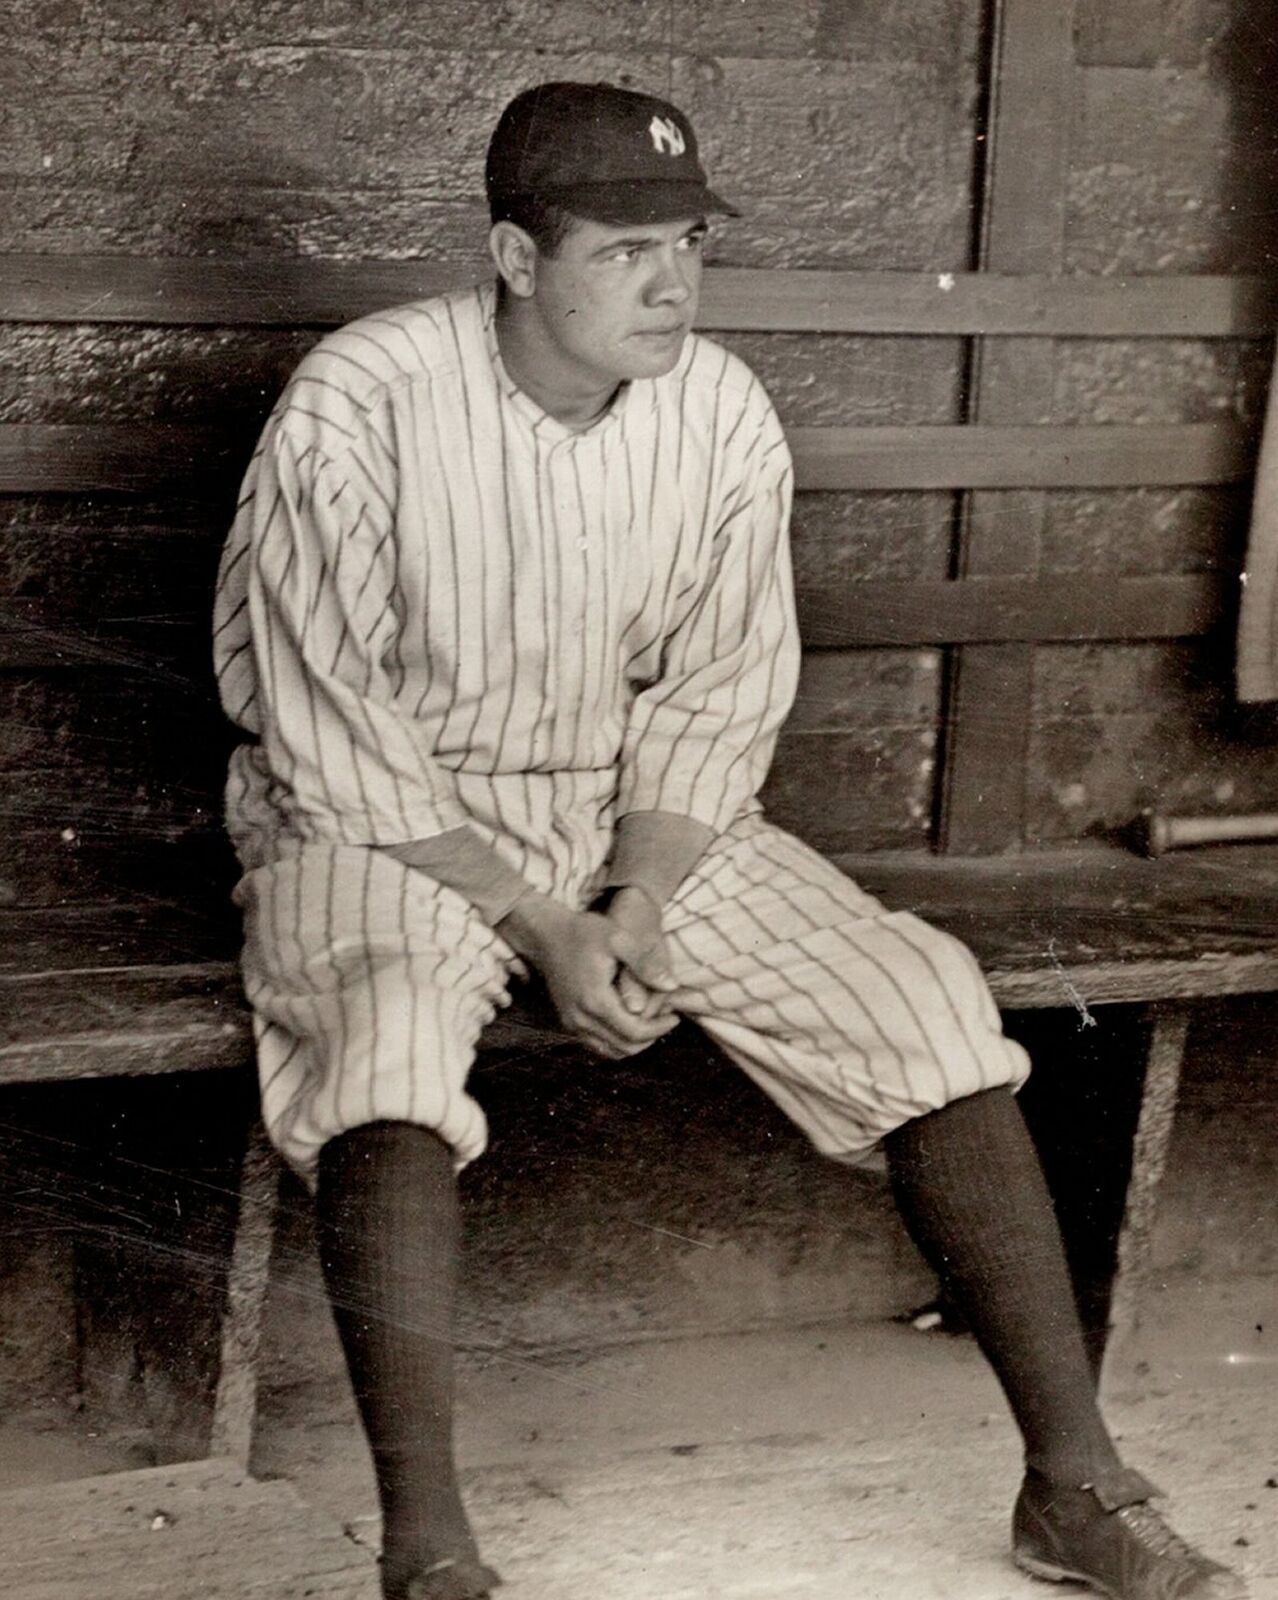 1927 BABE RUTH New York Yankees DUGOUT PHOTO  (185-i)